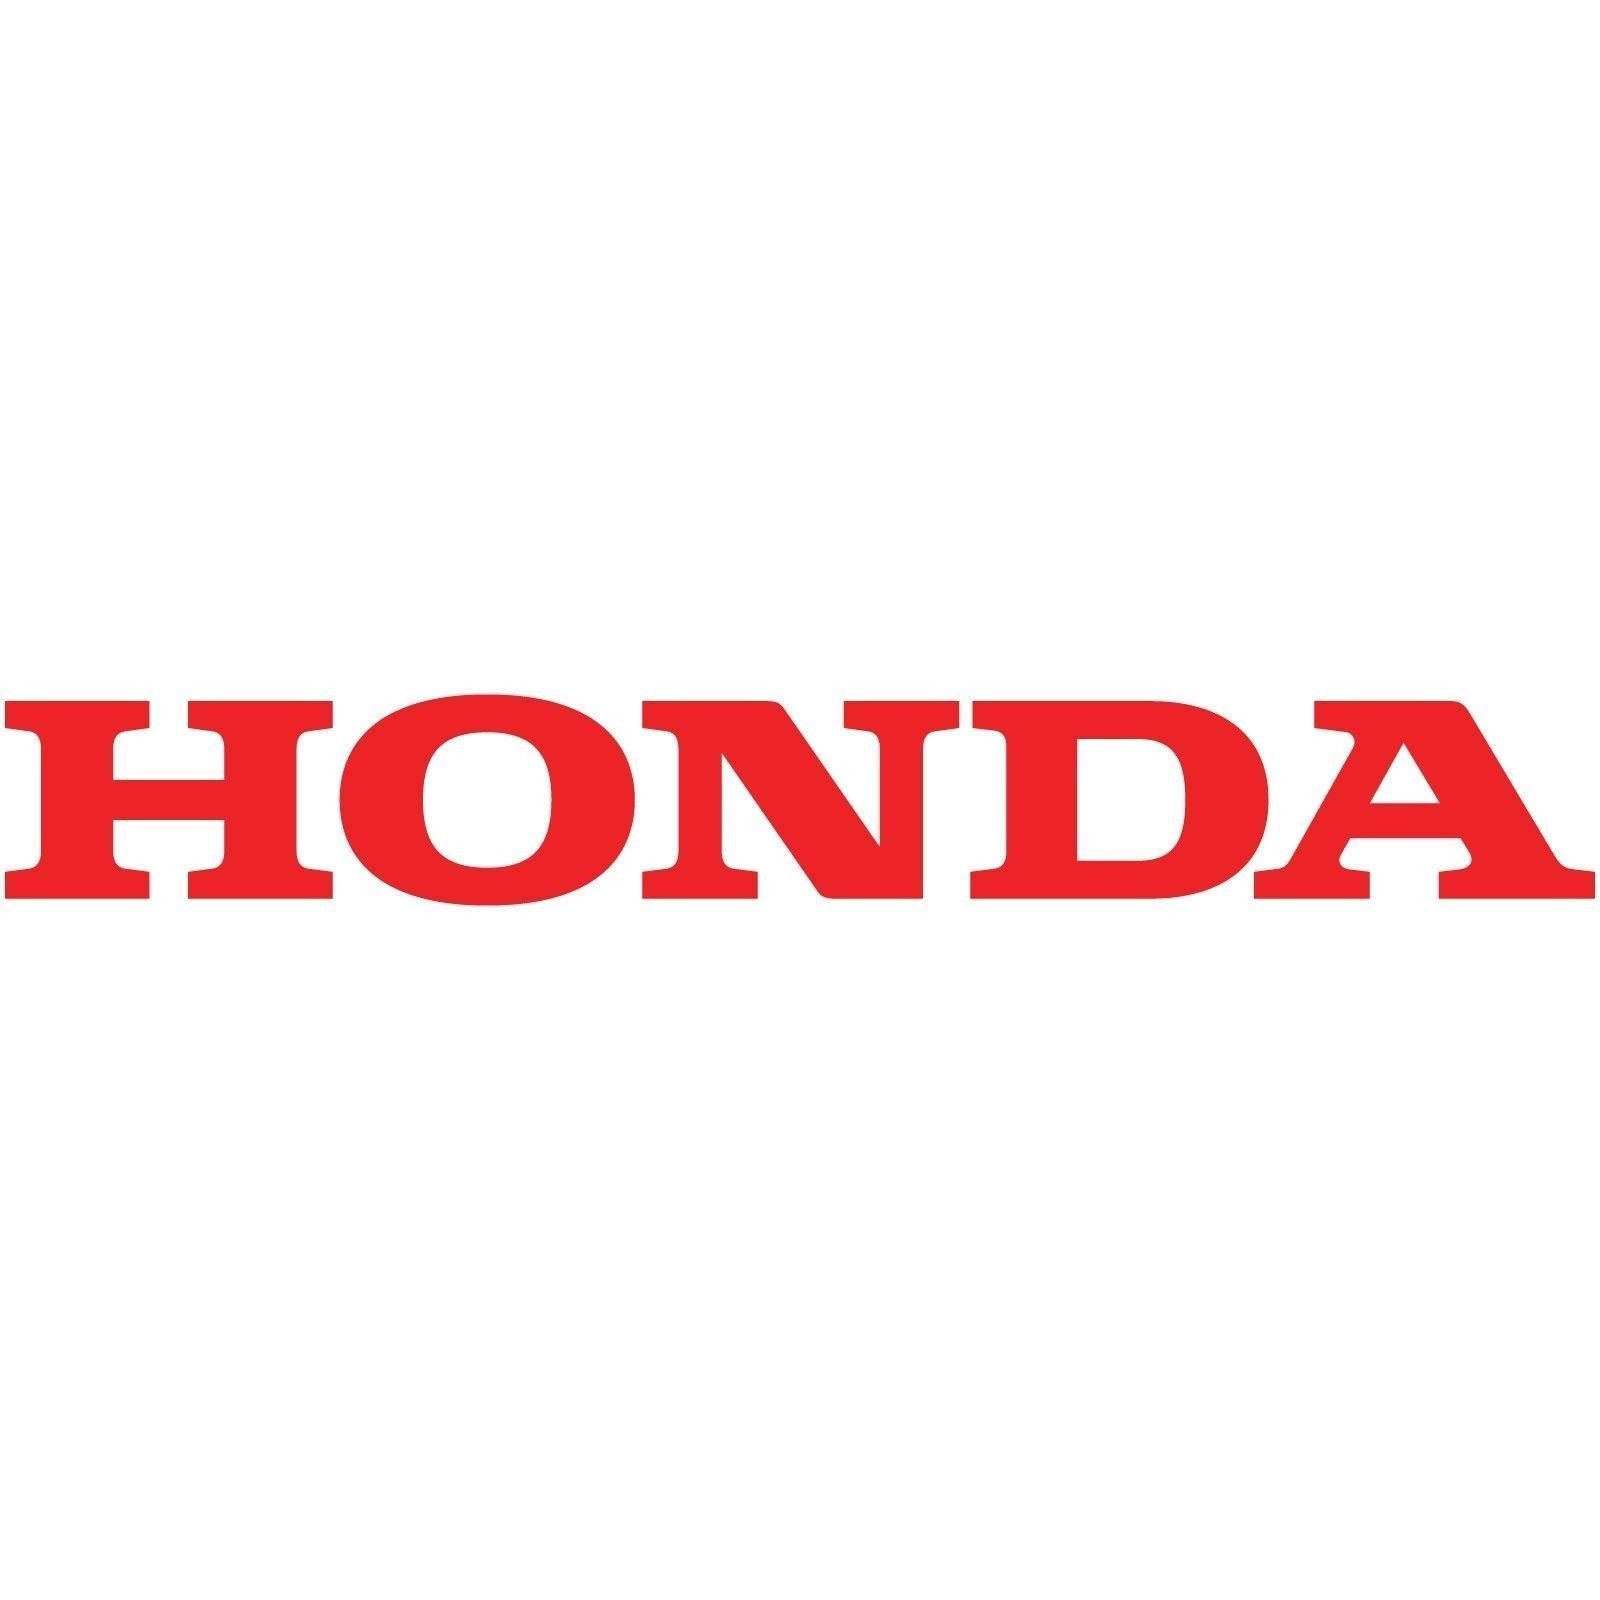 2x-HONDA-Logo-Vinyl-Decal-FD1058.jpg